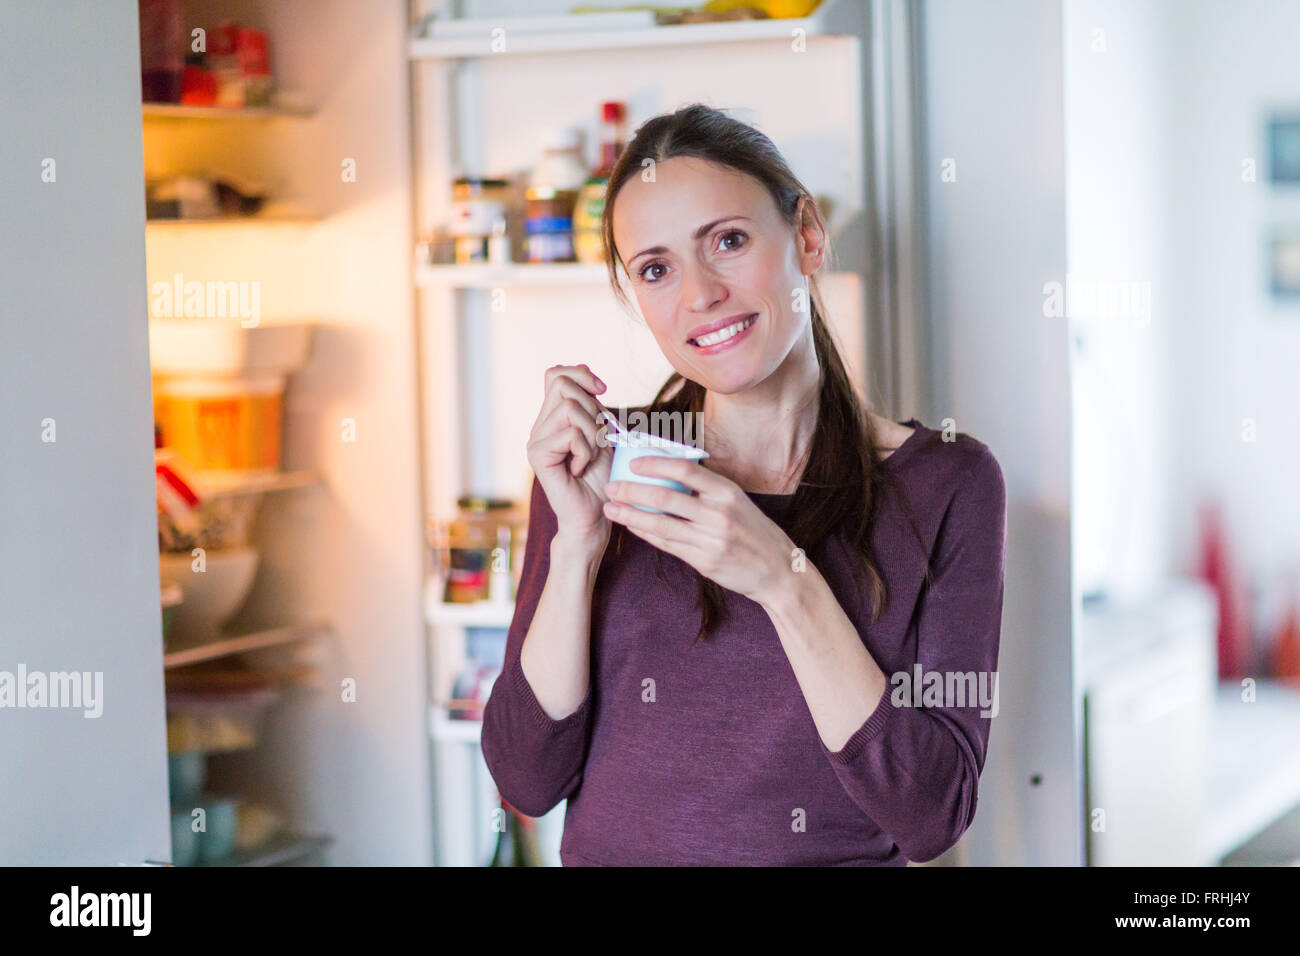 Woman eating yoghurt. Stock Photo